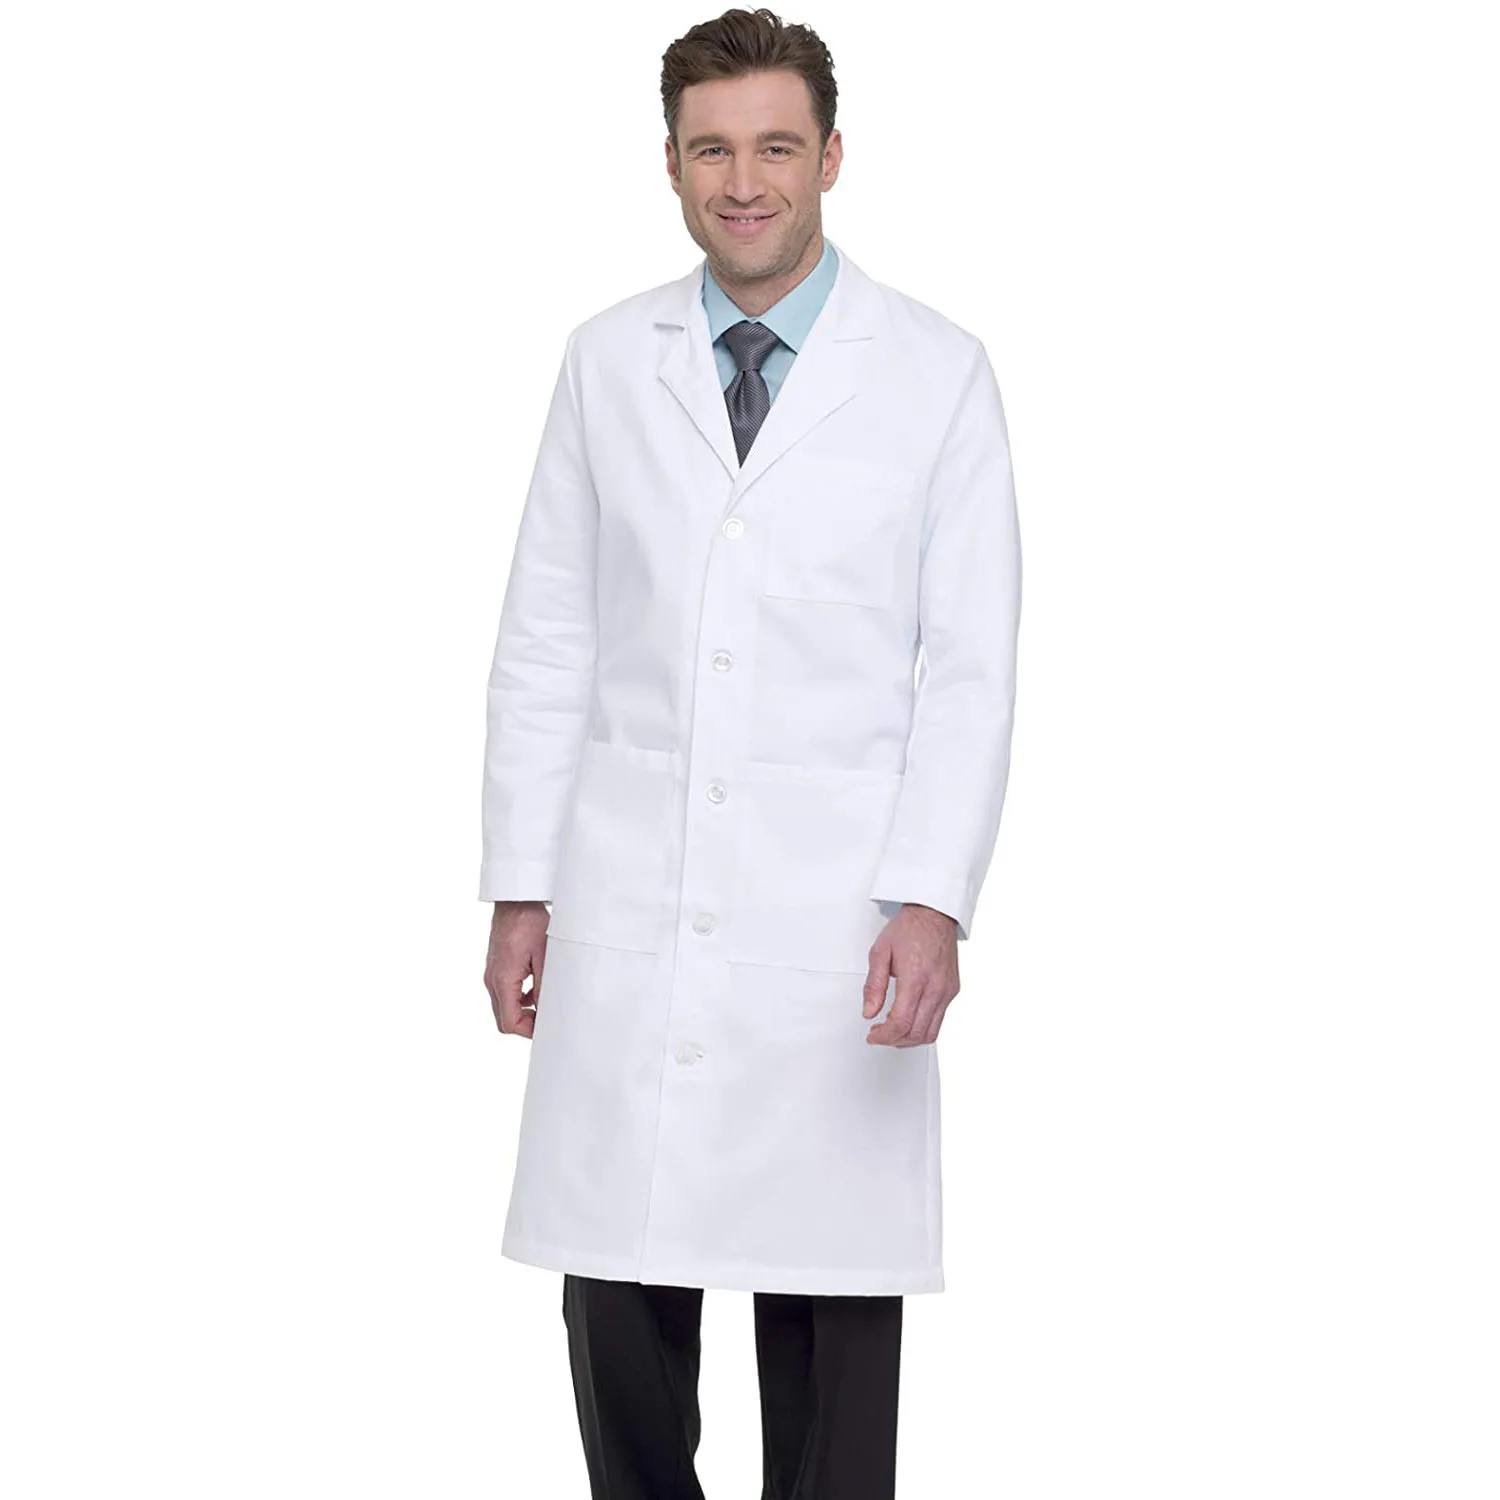 Белый халат медицинский мужской. Халат медицинский мужской. Лабораторный халат. Халат лабораторный мужской.